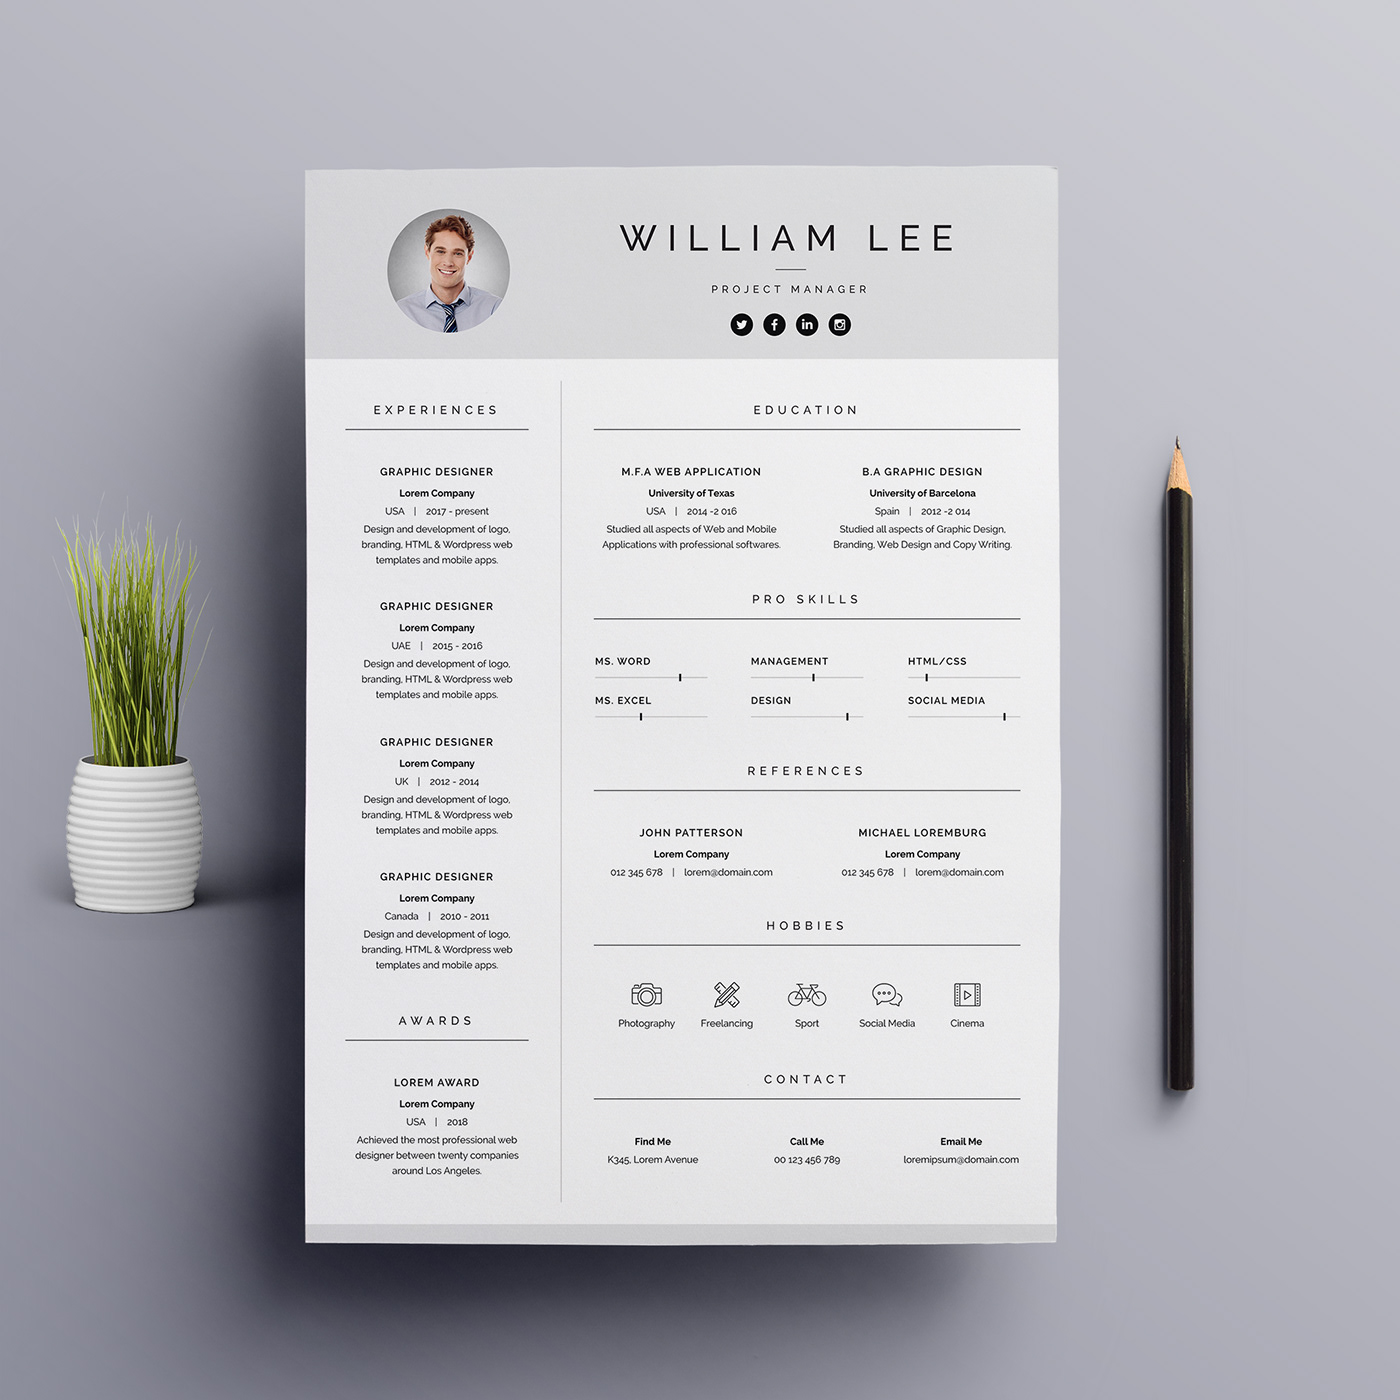 Resume CV Curriculum Vitae manager resume clean resume simple resume Creative Resume Minimal Resume inspirational resume